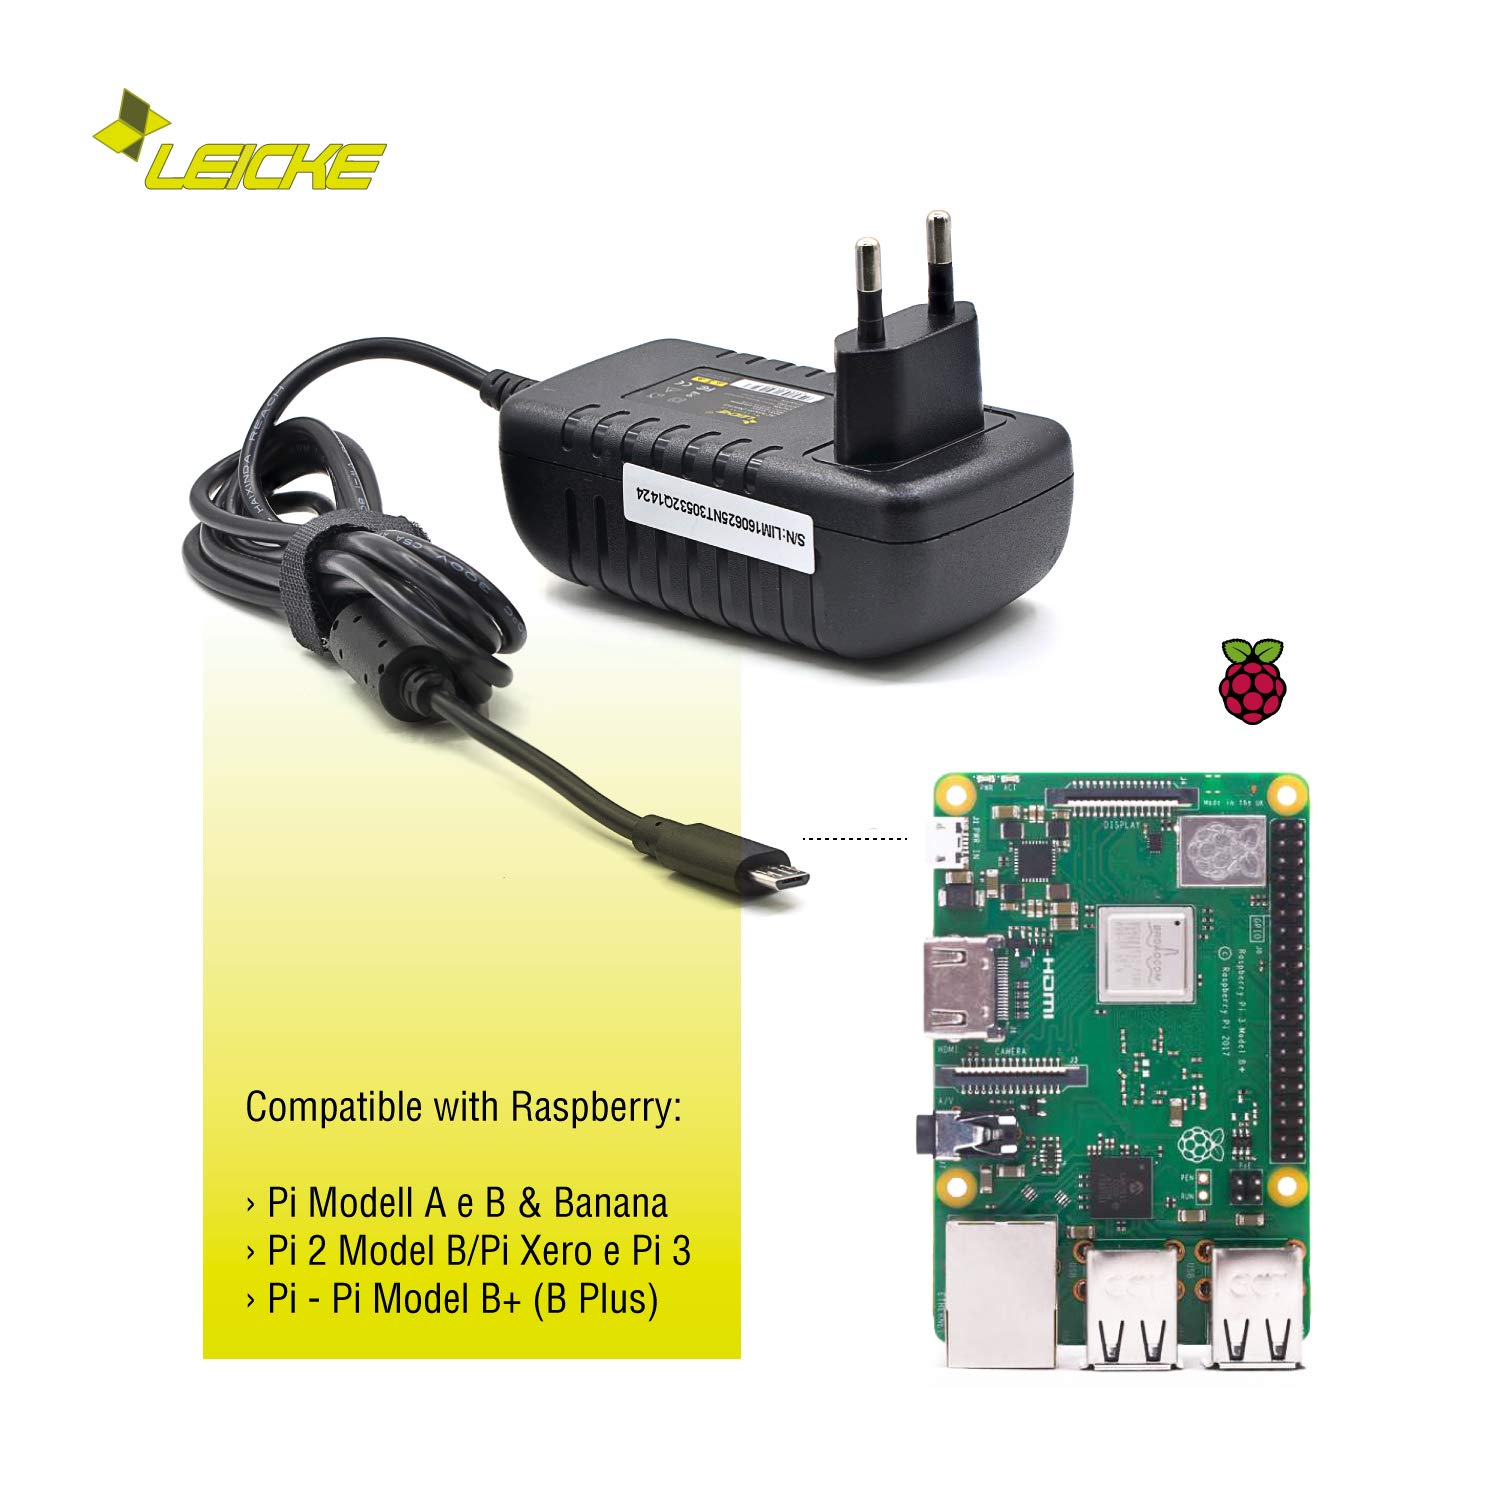 LEICKE ULL Netzteil 5V 2.5A und A für Micro Ladegerät etc & Modell B Banana USB-Stecker Raspberry Pi mit Netzteil,Ladegeräte